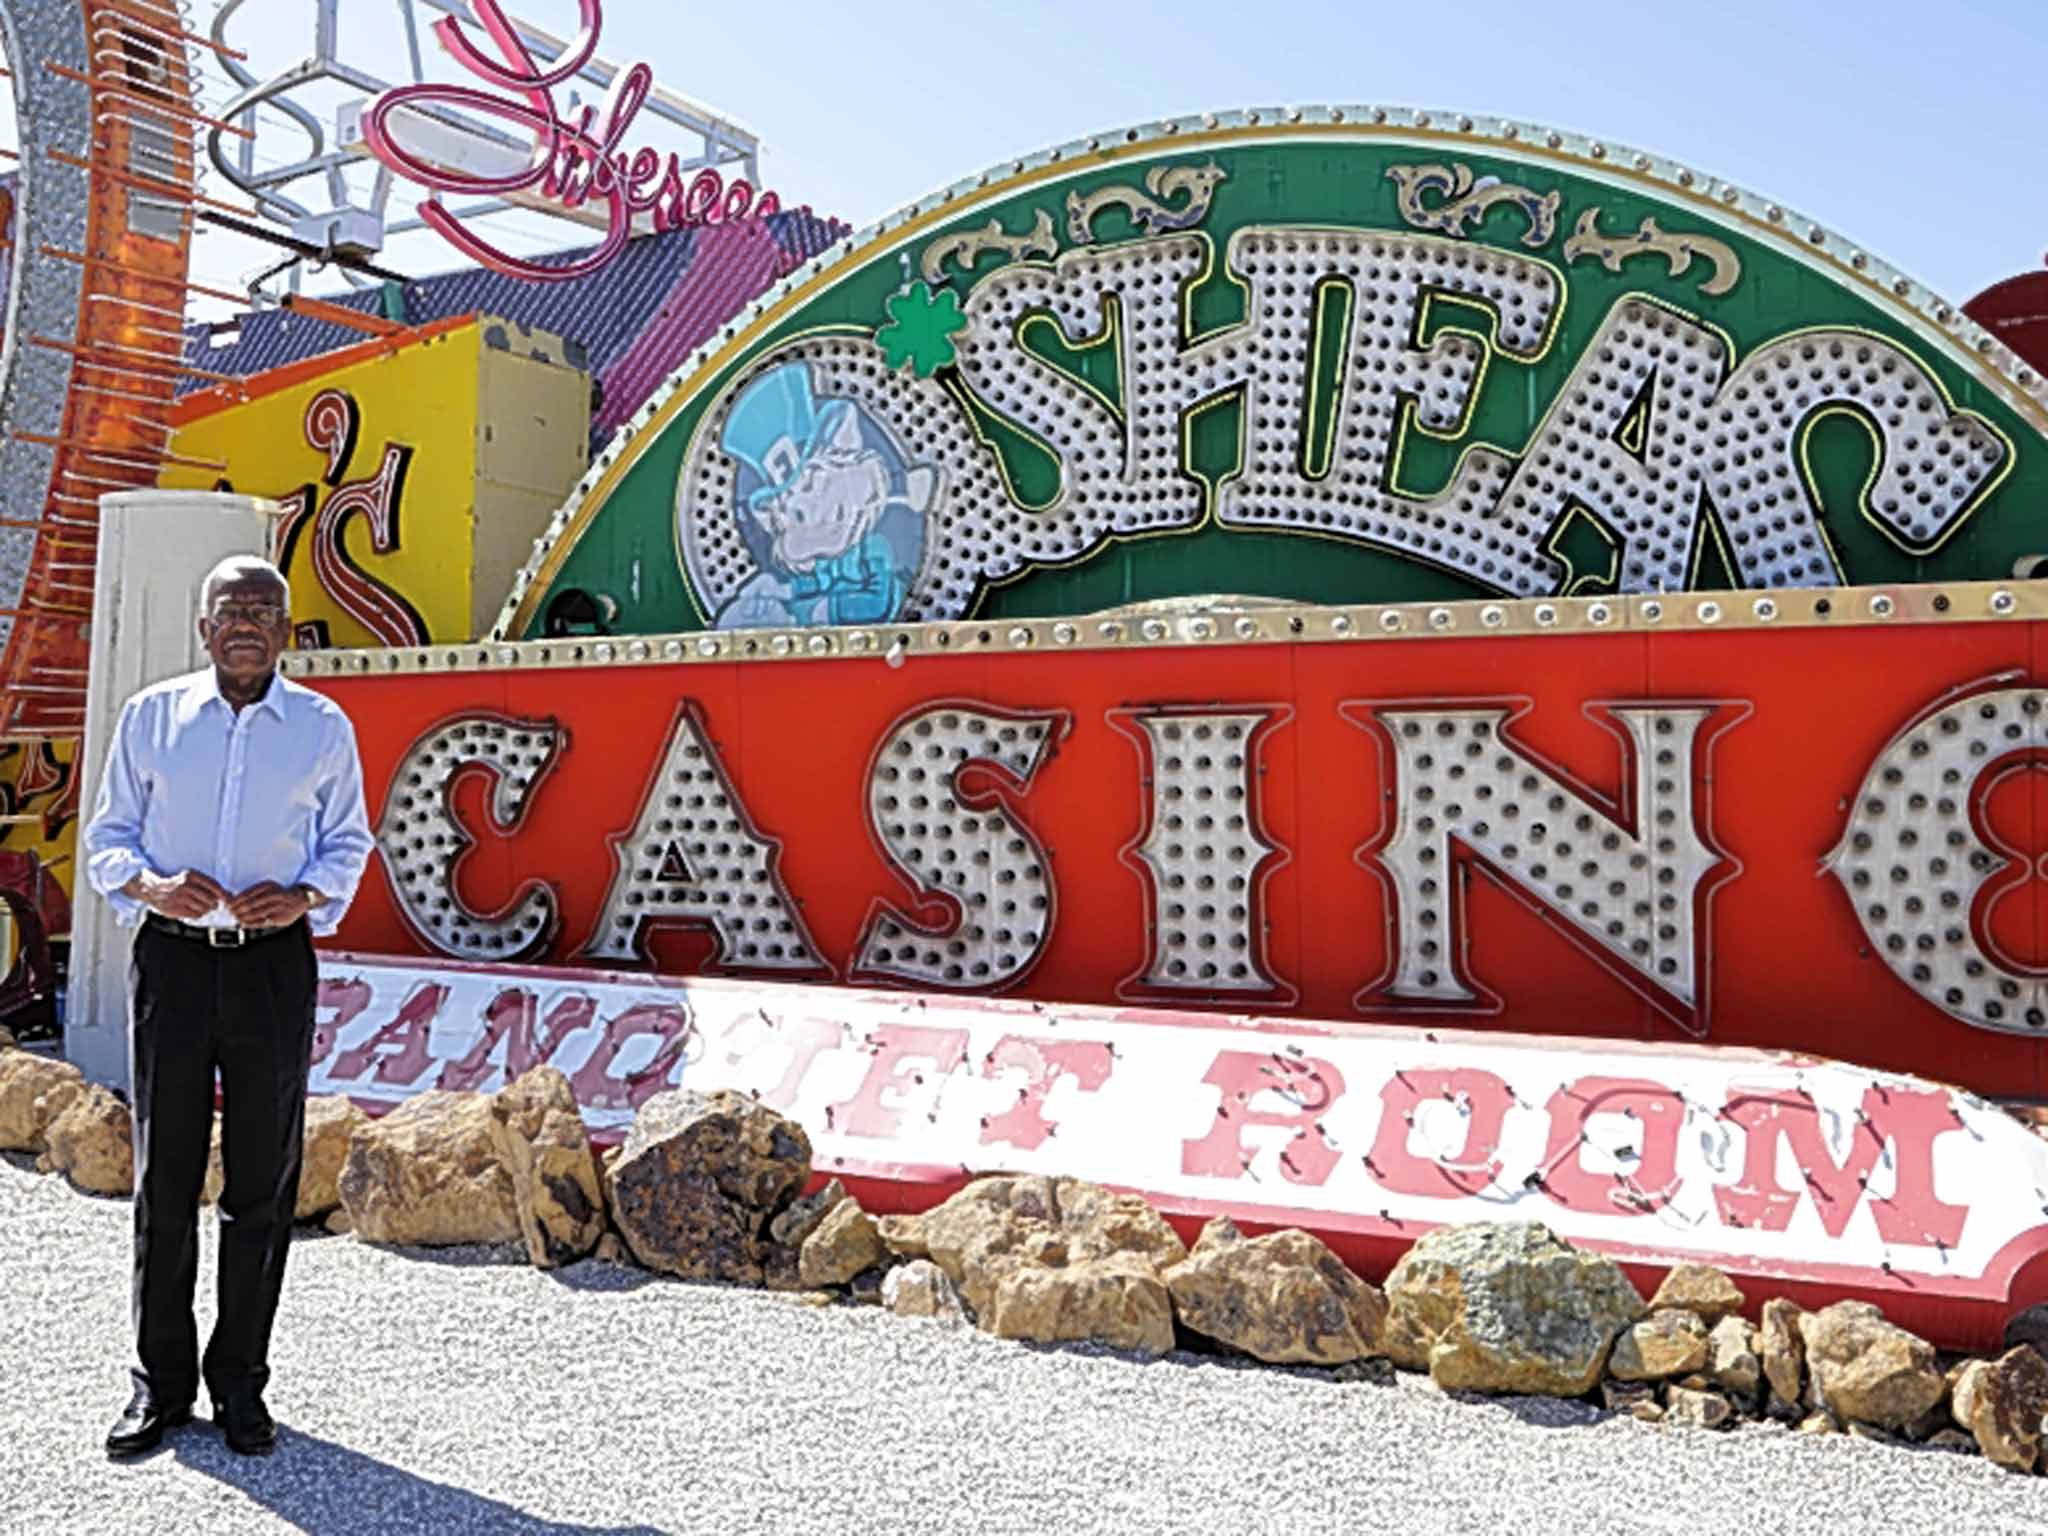 Gambling man: Trevor McDonald's latest documentary looks at the dark side of Las Vegas